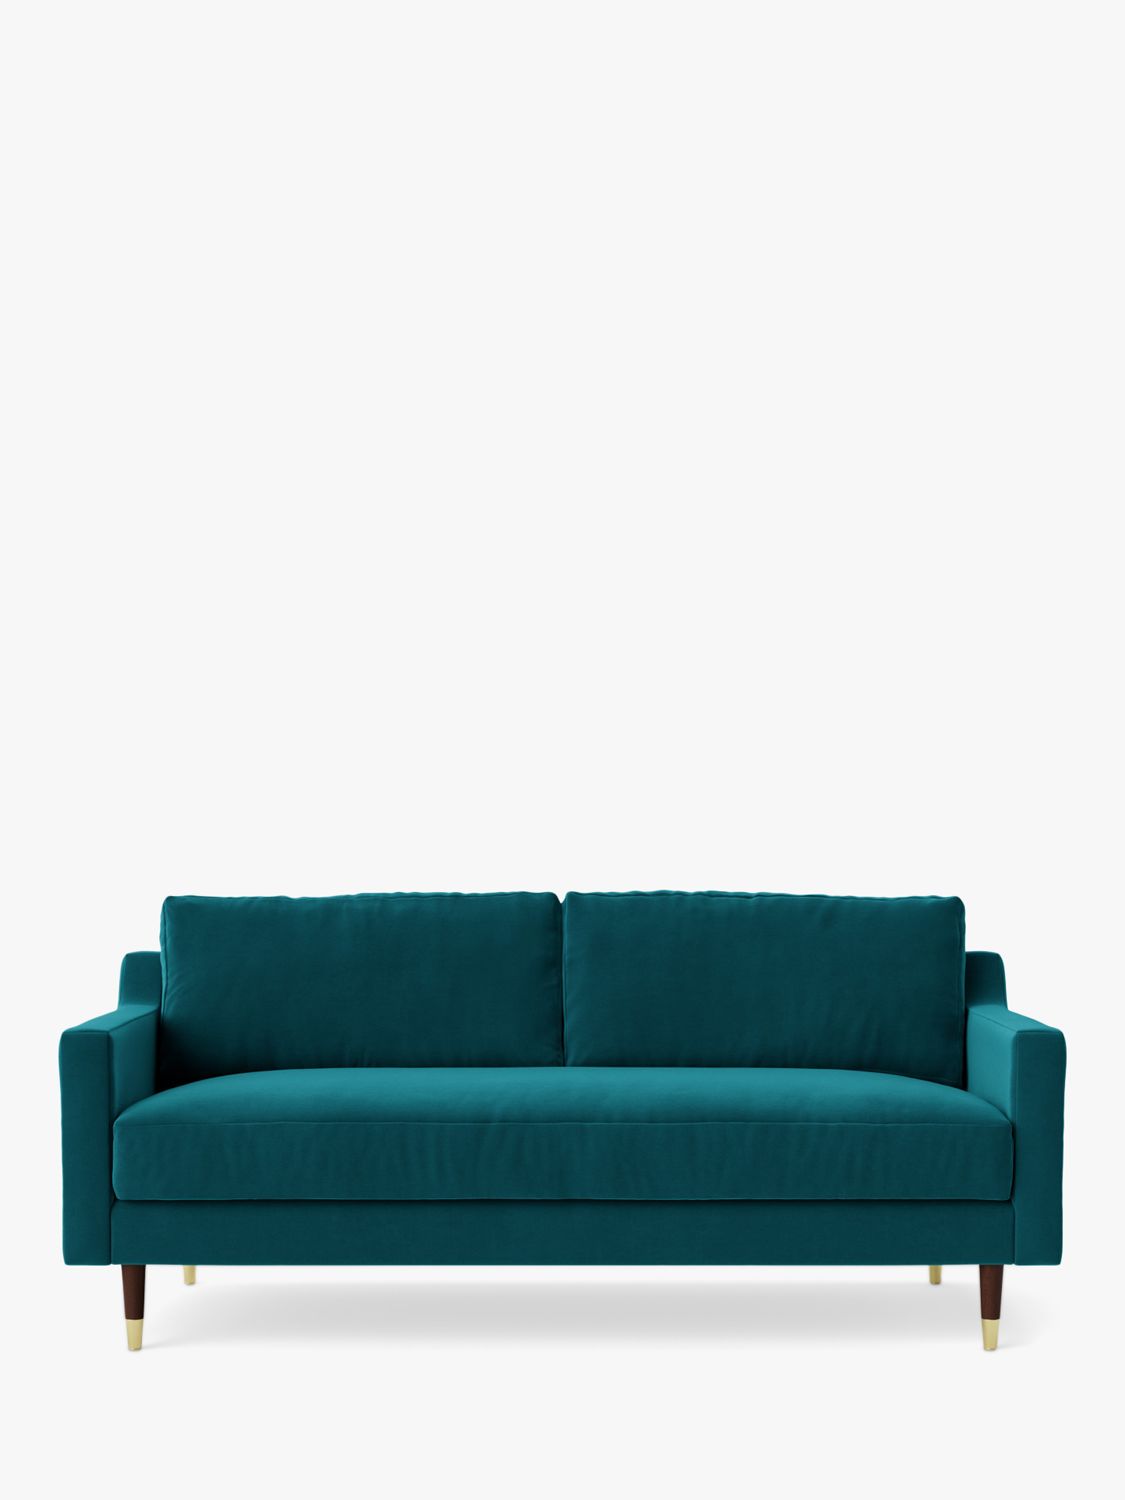 Rieti Range, Swoon Rieti Medium 2 Seater Sofa, Easy Velvet Kingfisher